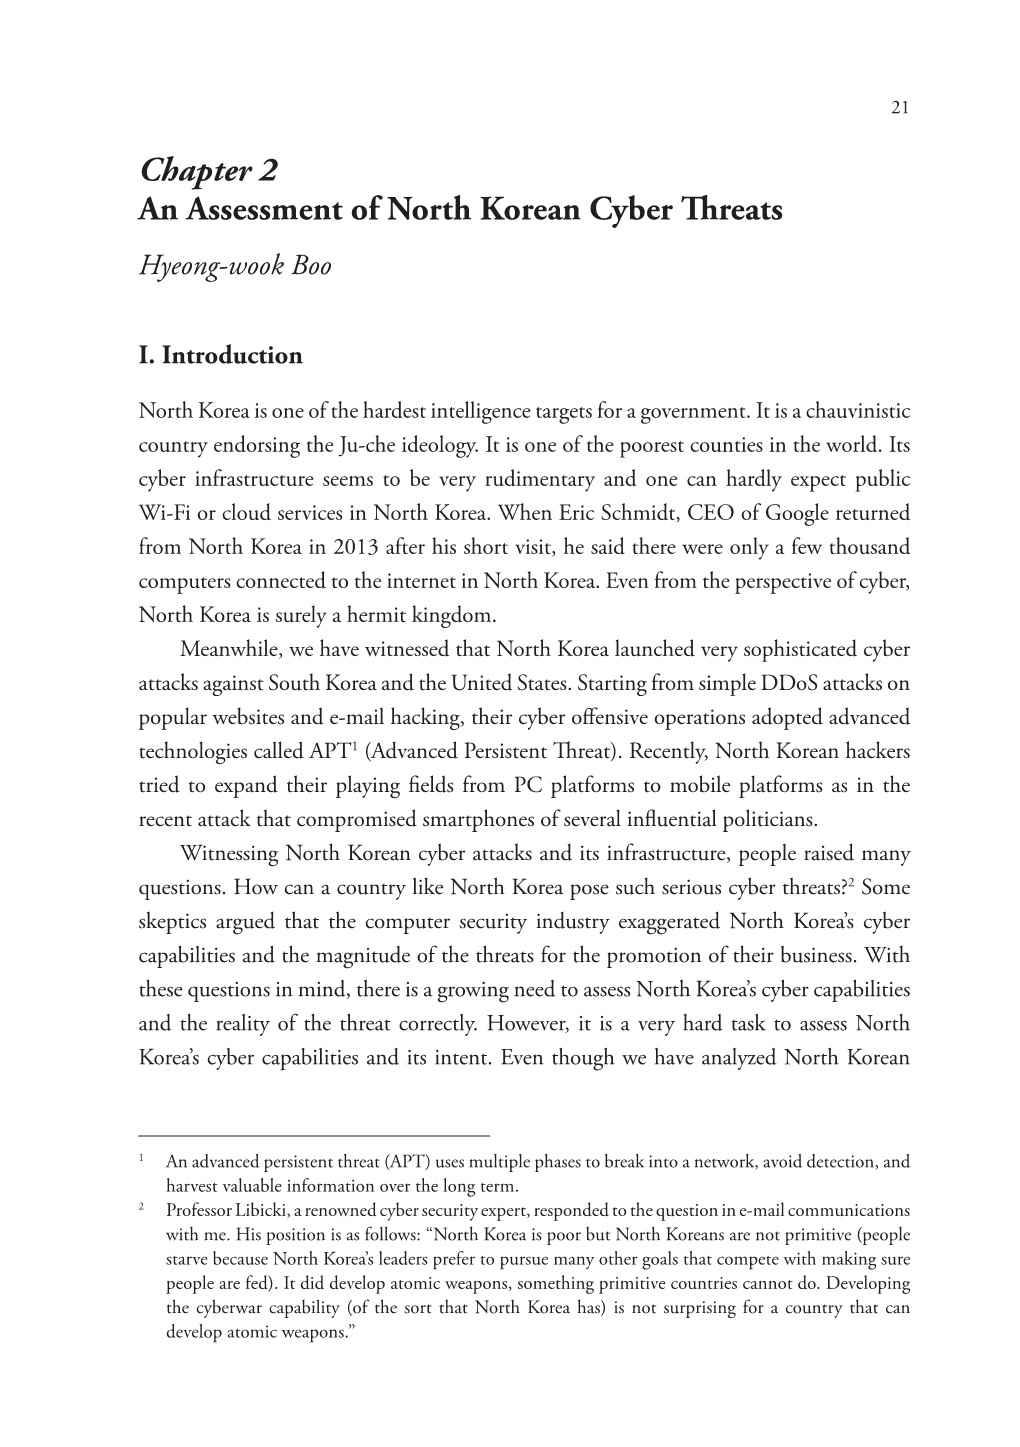 Chapter 2 an Assessment of North Korean Cyber Threats Hyeong-Wook Boo